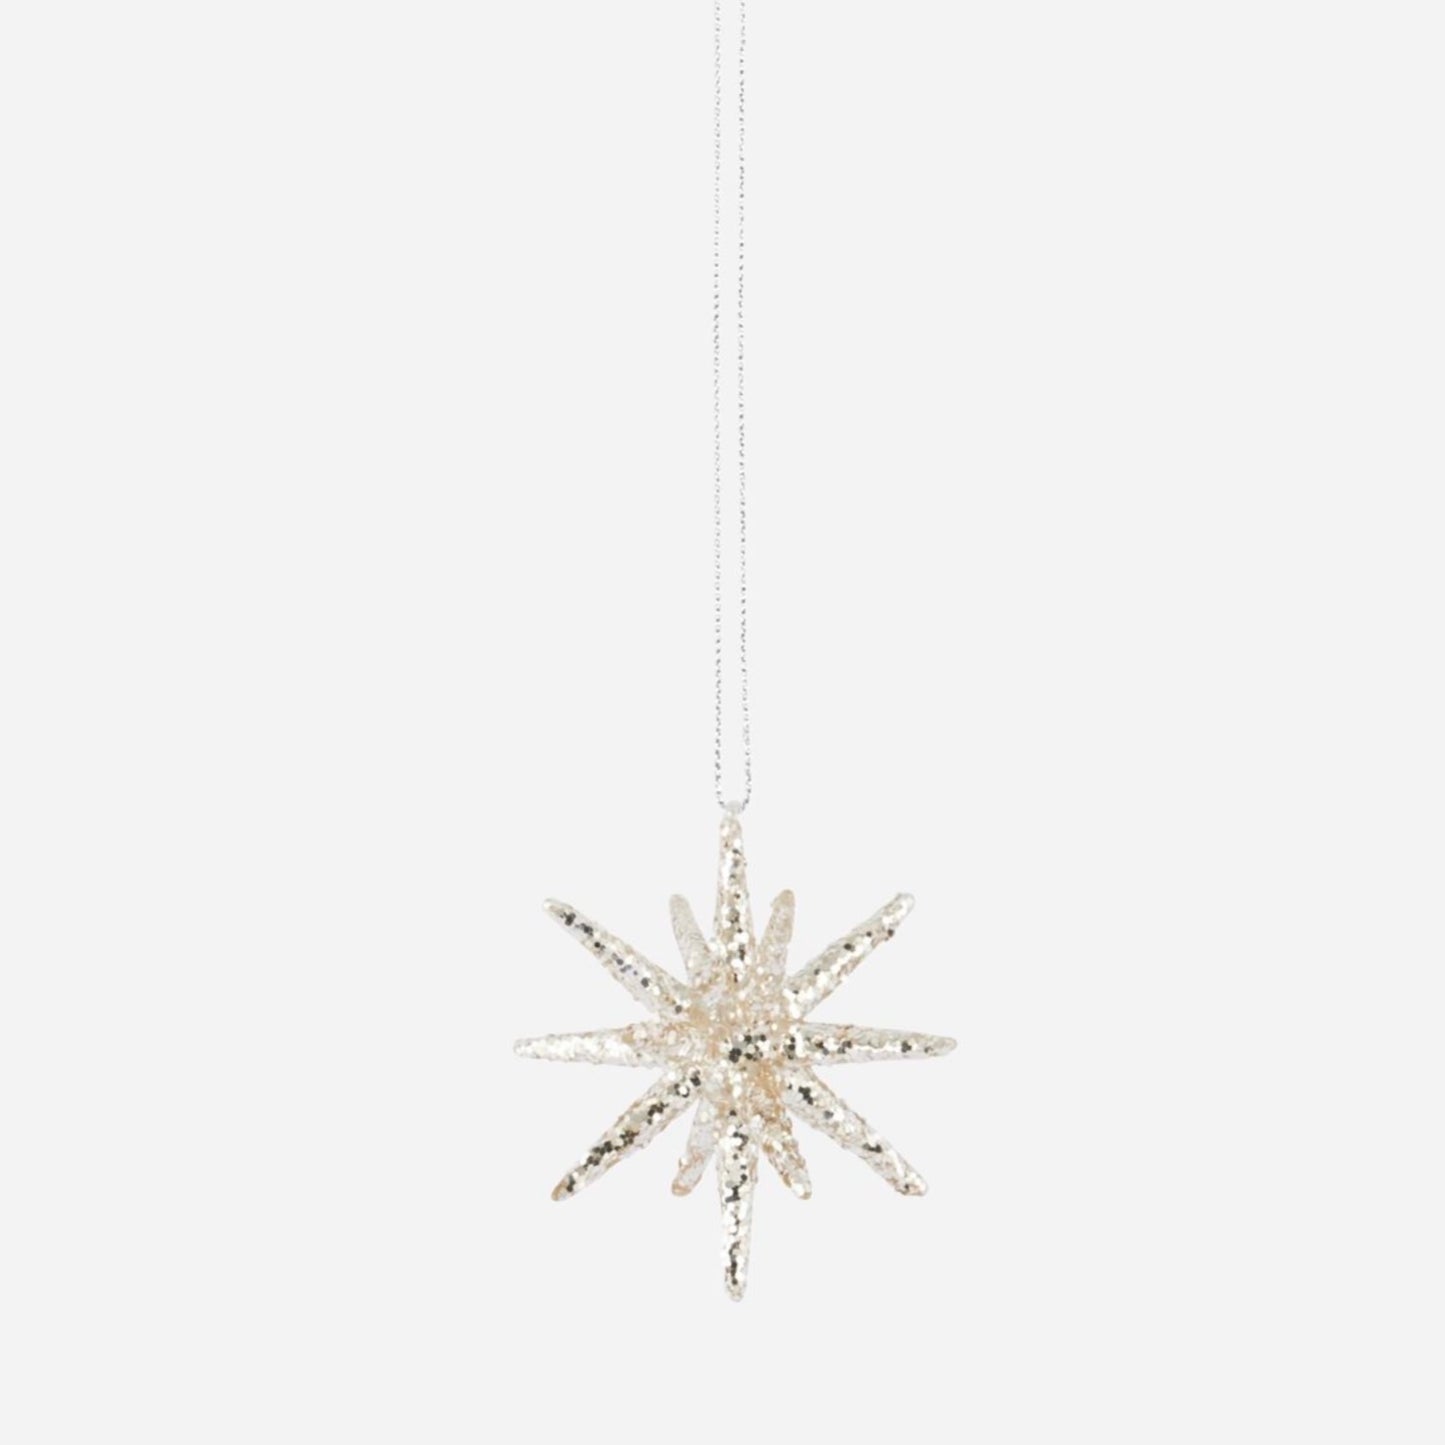 Glittery Star Ornament